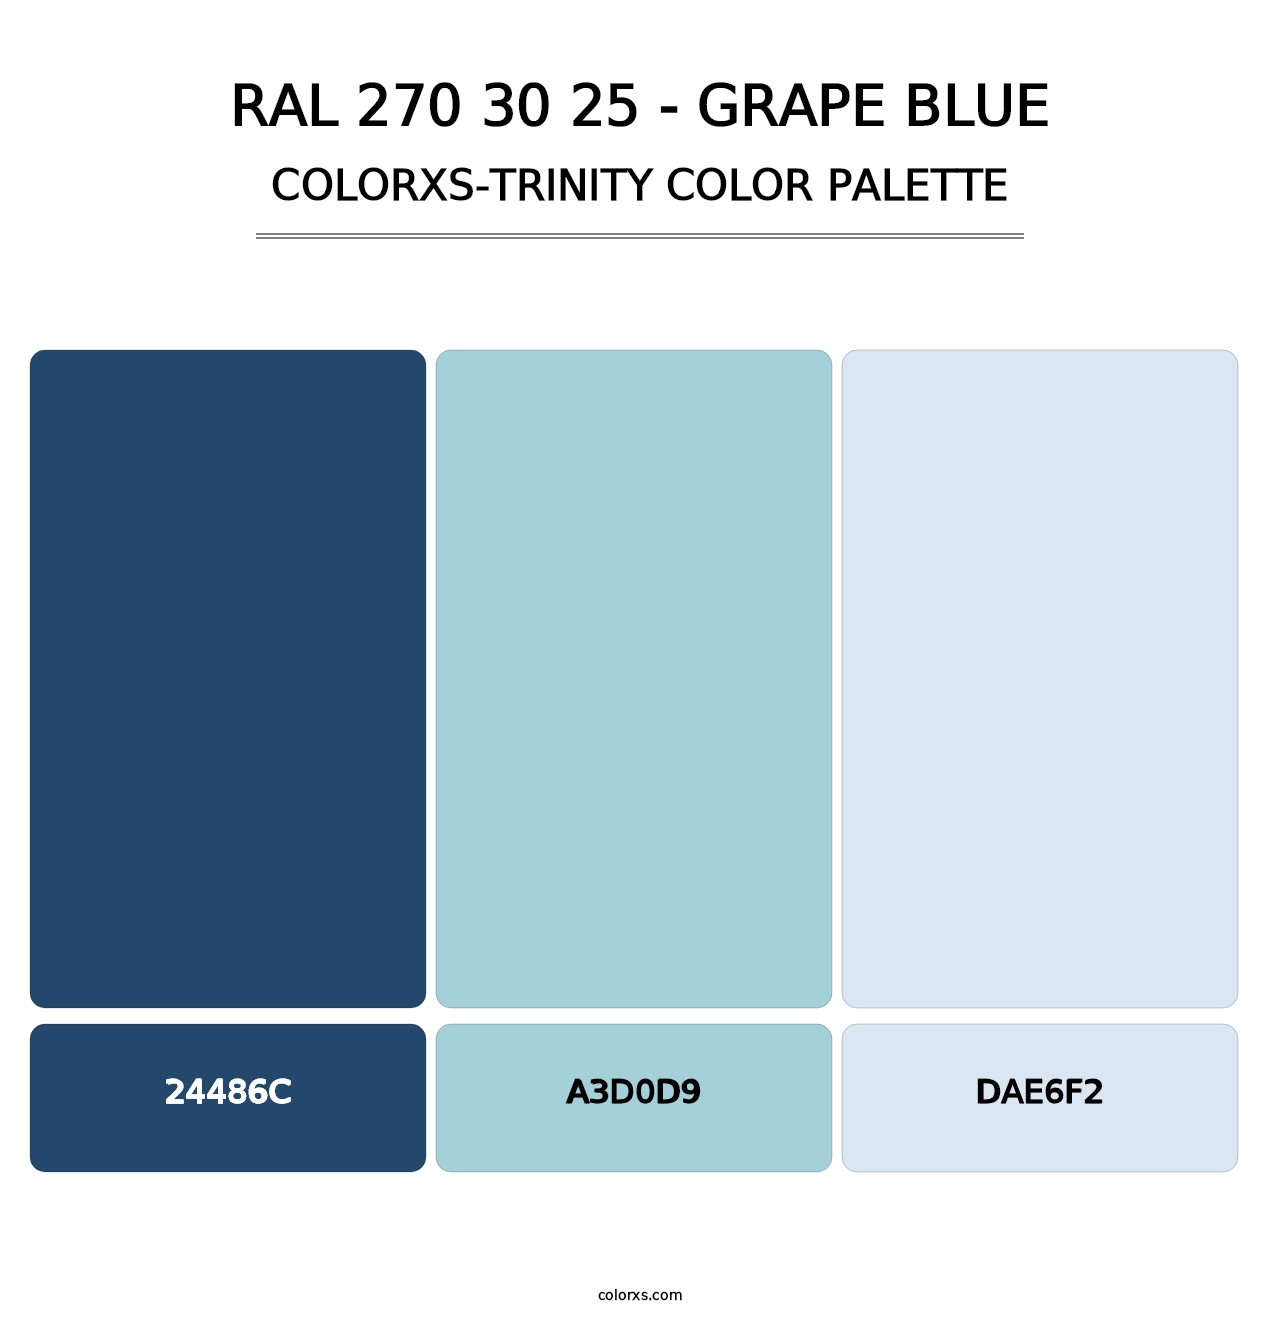 RAL 270 30 25 - Grape Blue - Colorxs Trinity Palette